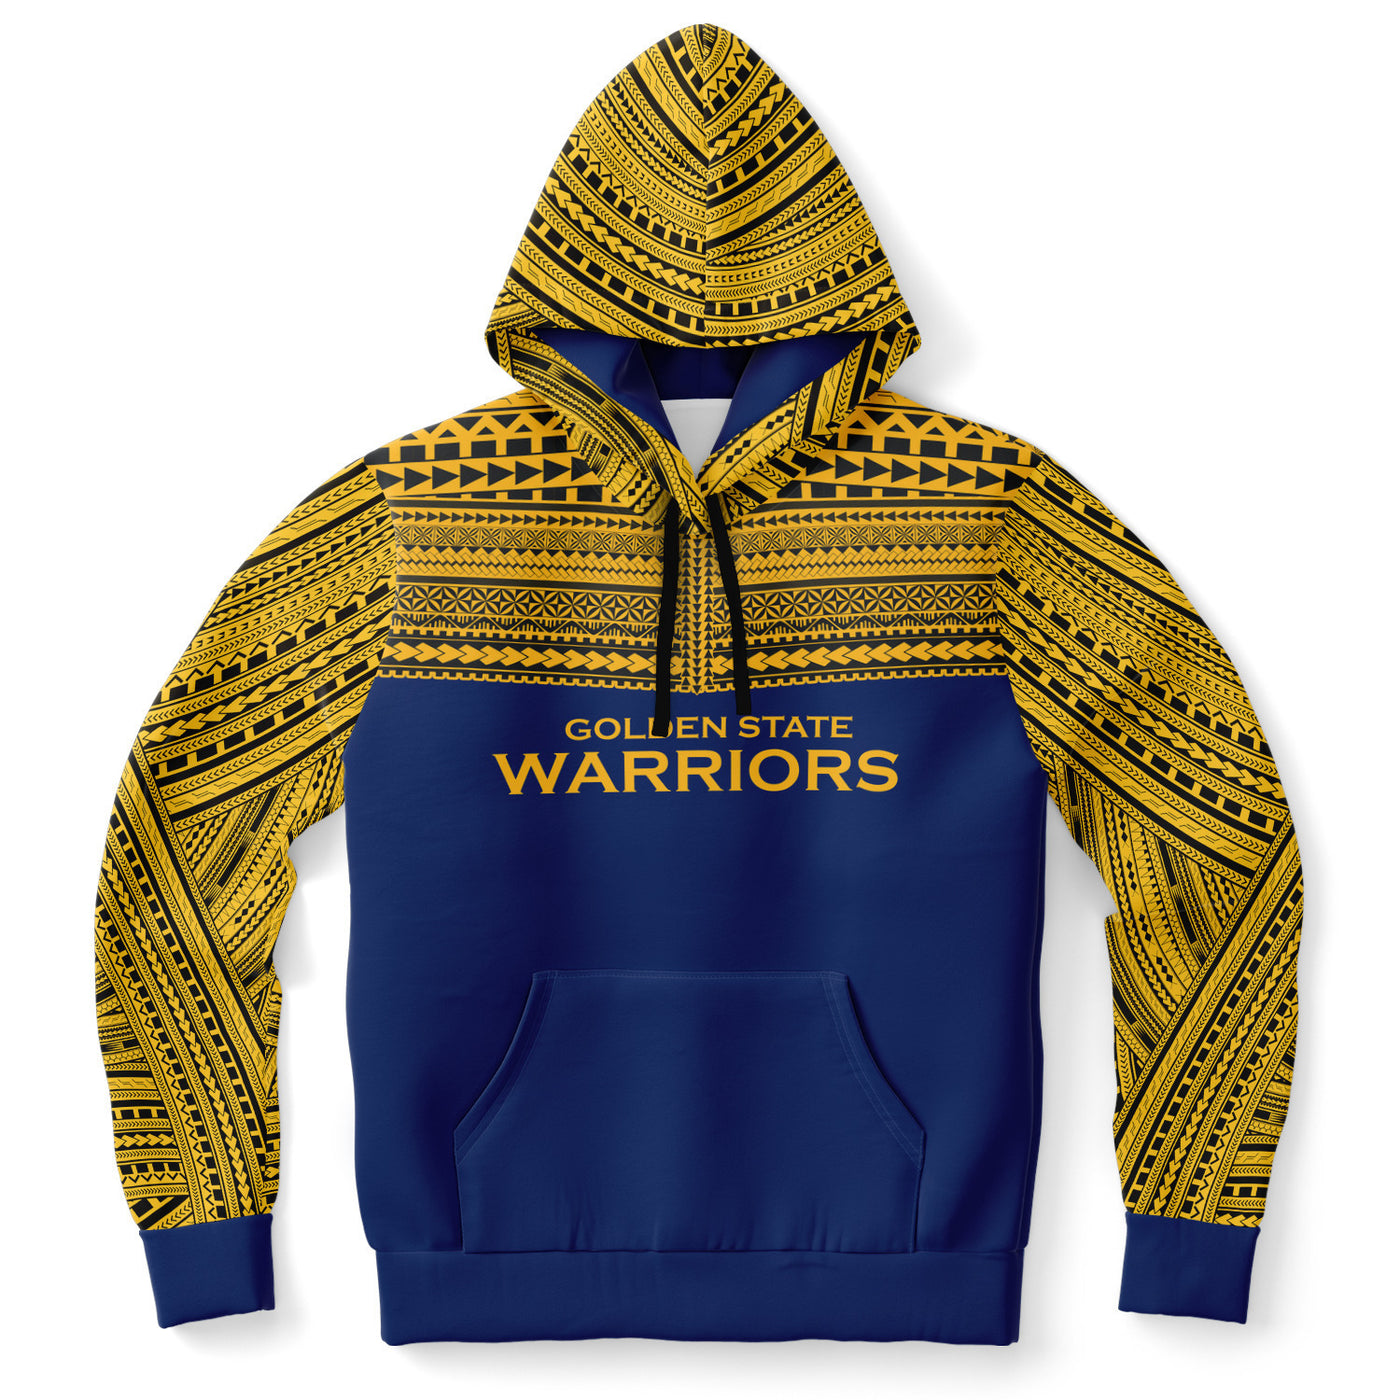 Golden State Warriors Hoodie  Golden state warriors hoodie, Golden state  warriors, Golden state